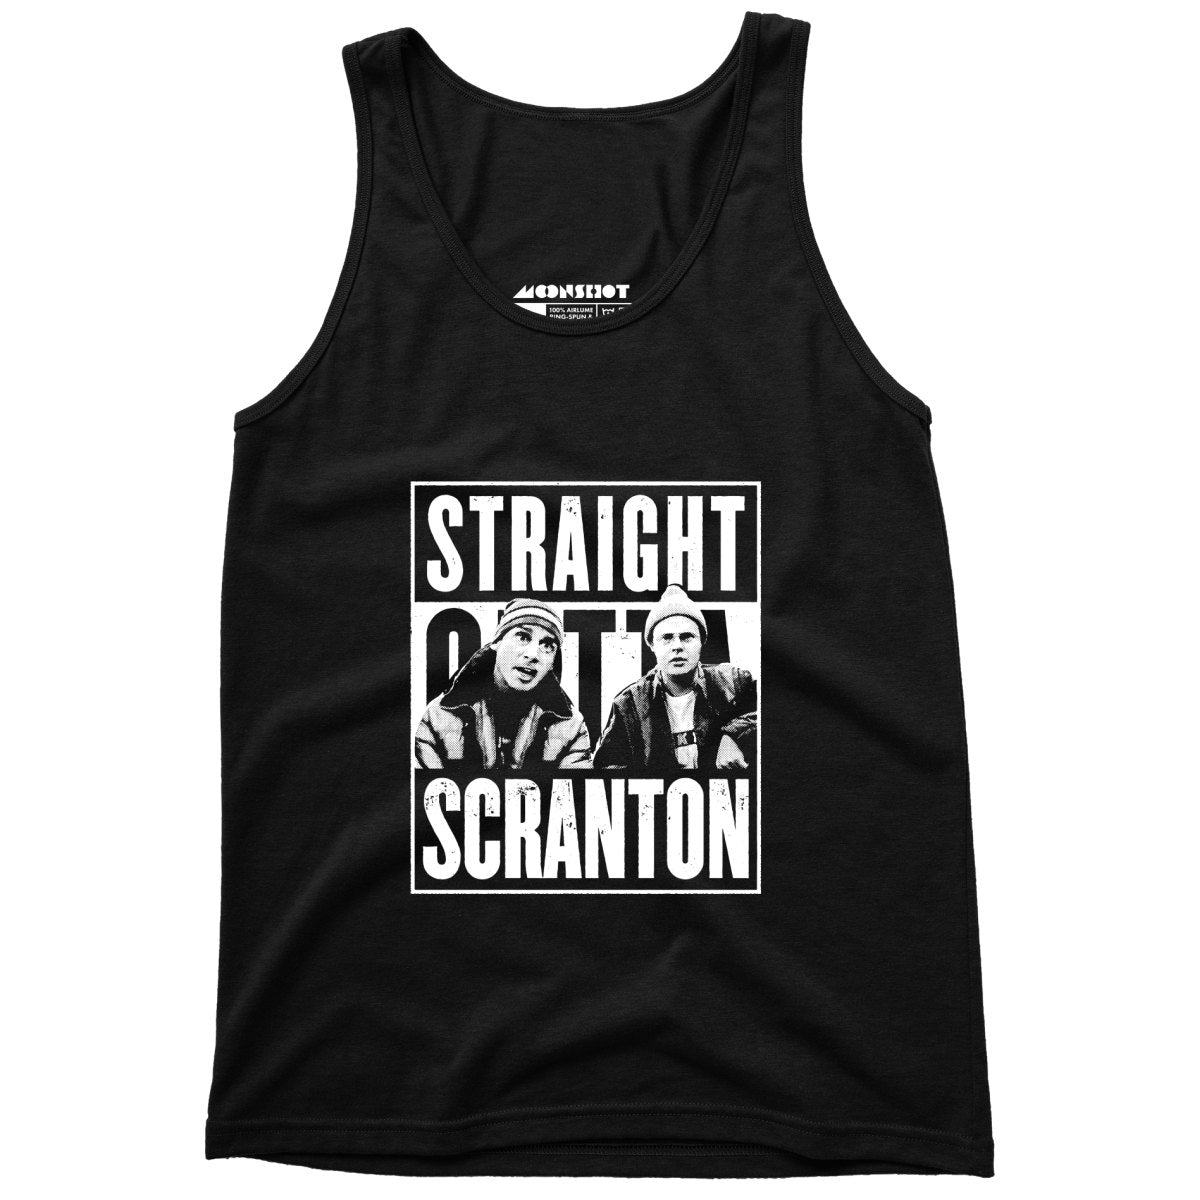 Straight Outta Scranton - Lazy Scranton - Unisex Tank Top